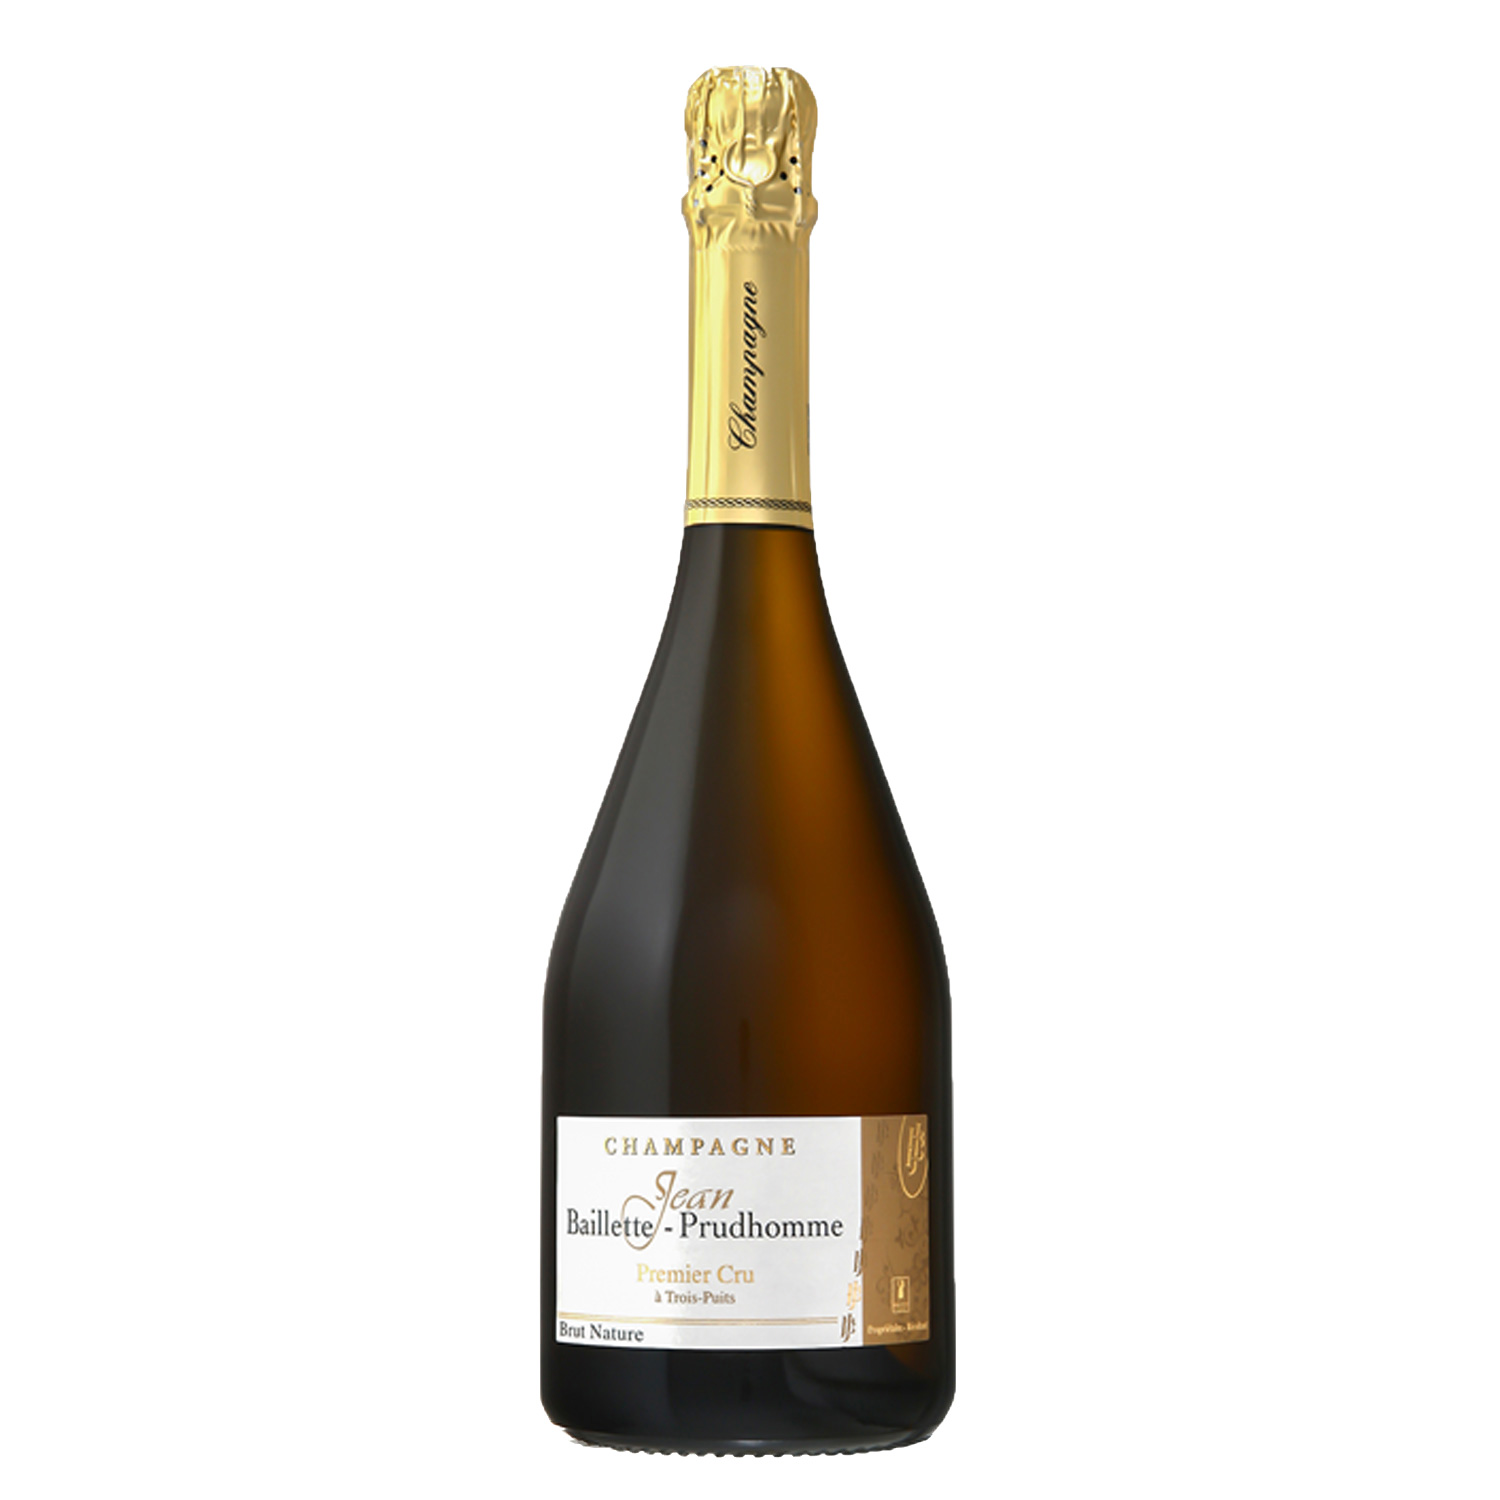 Champagne Jean Baillette Prudhomme Brut Nature